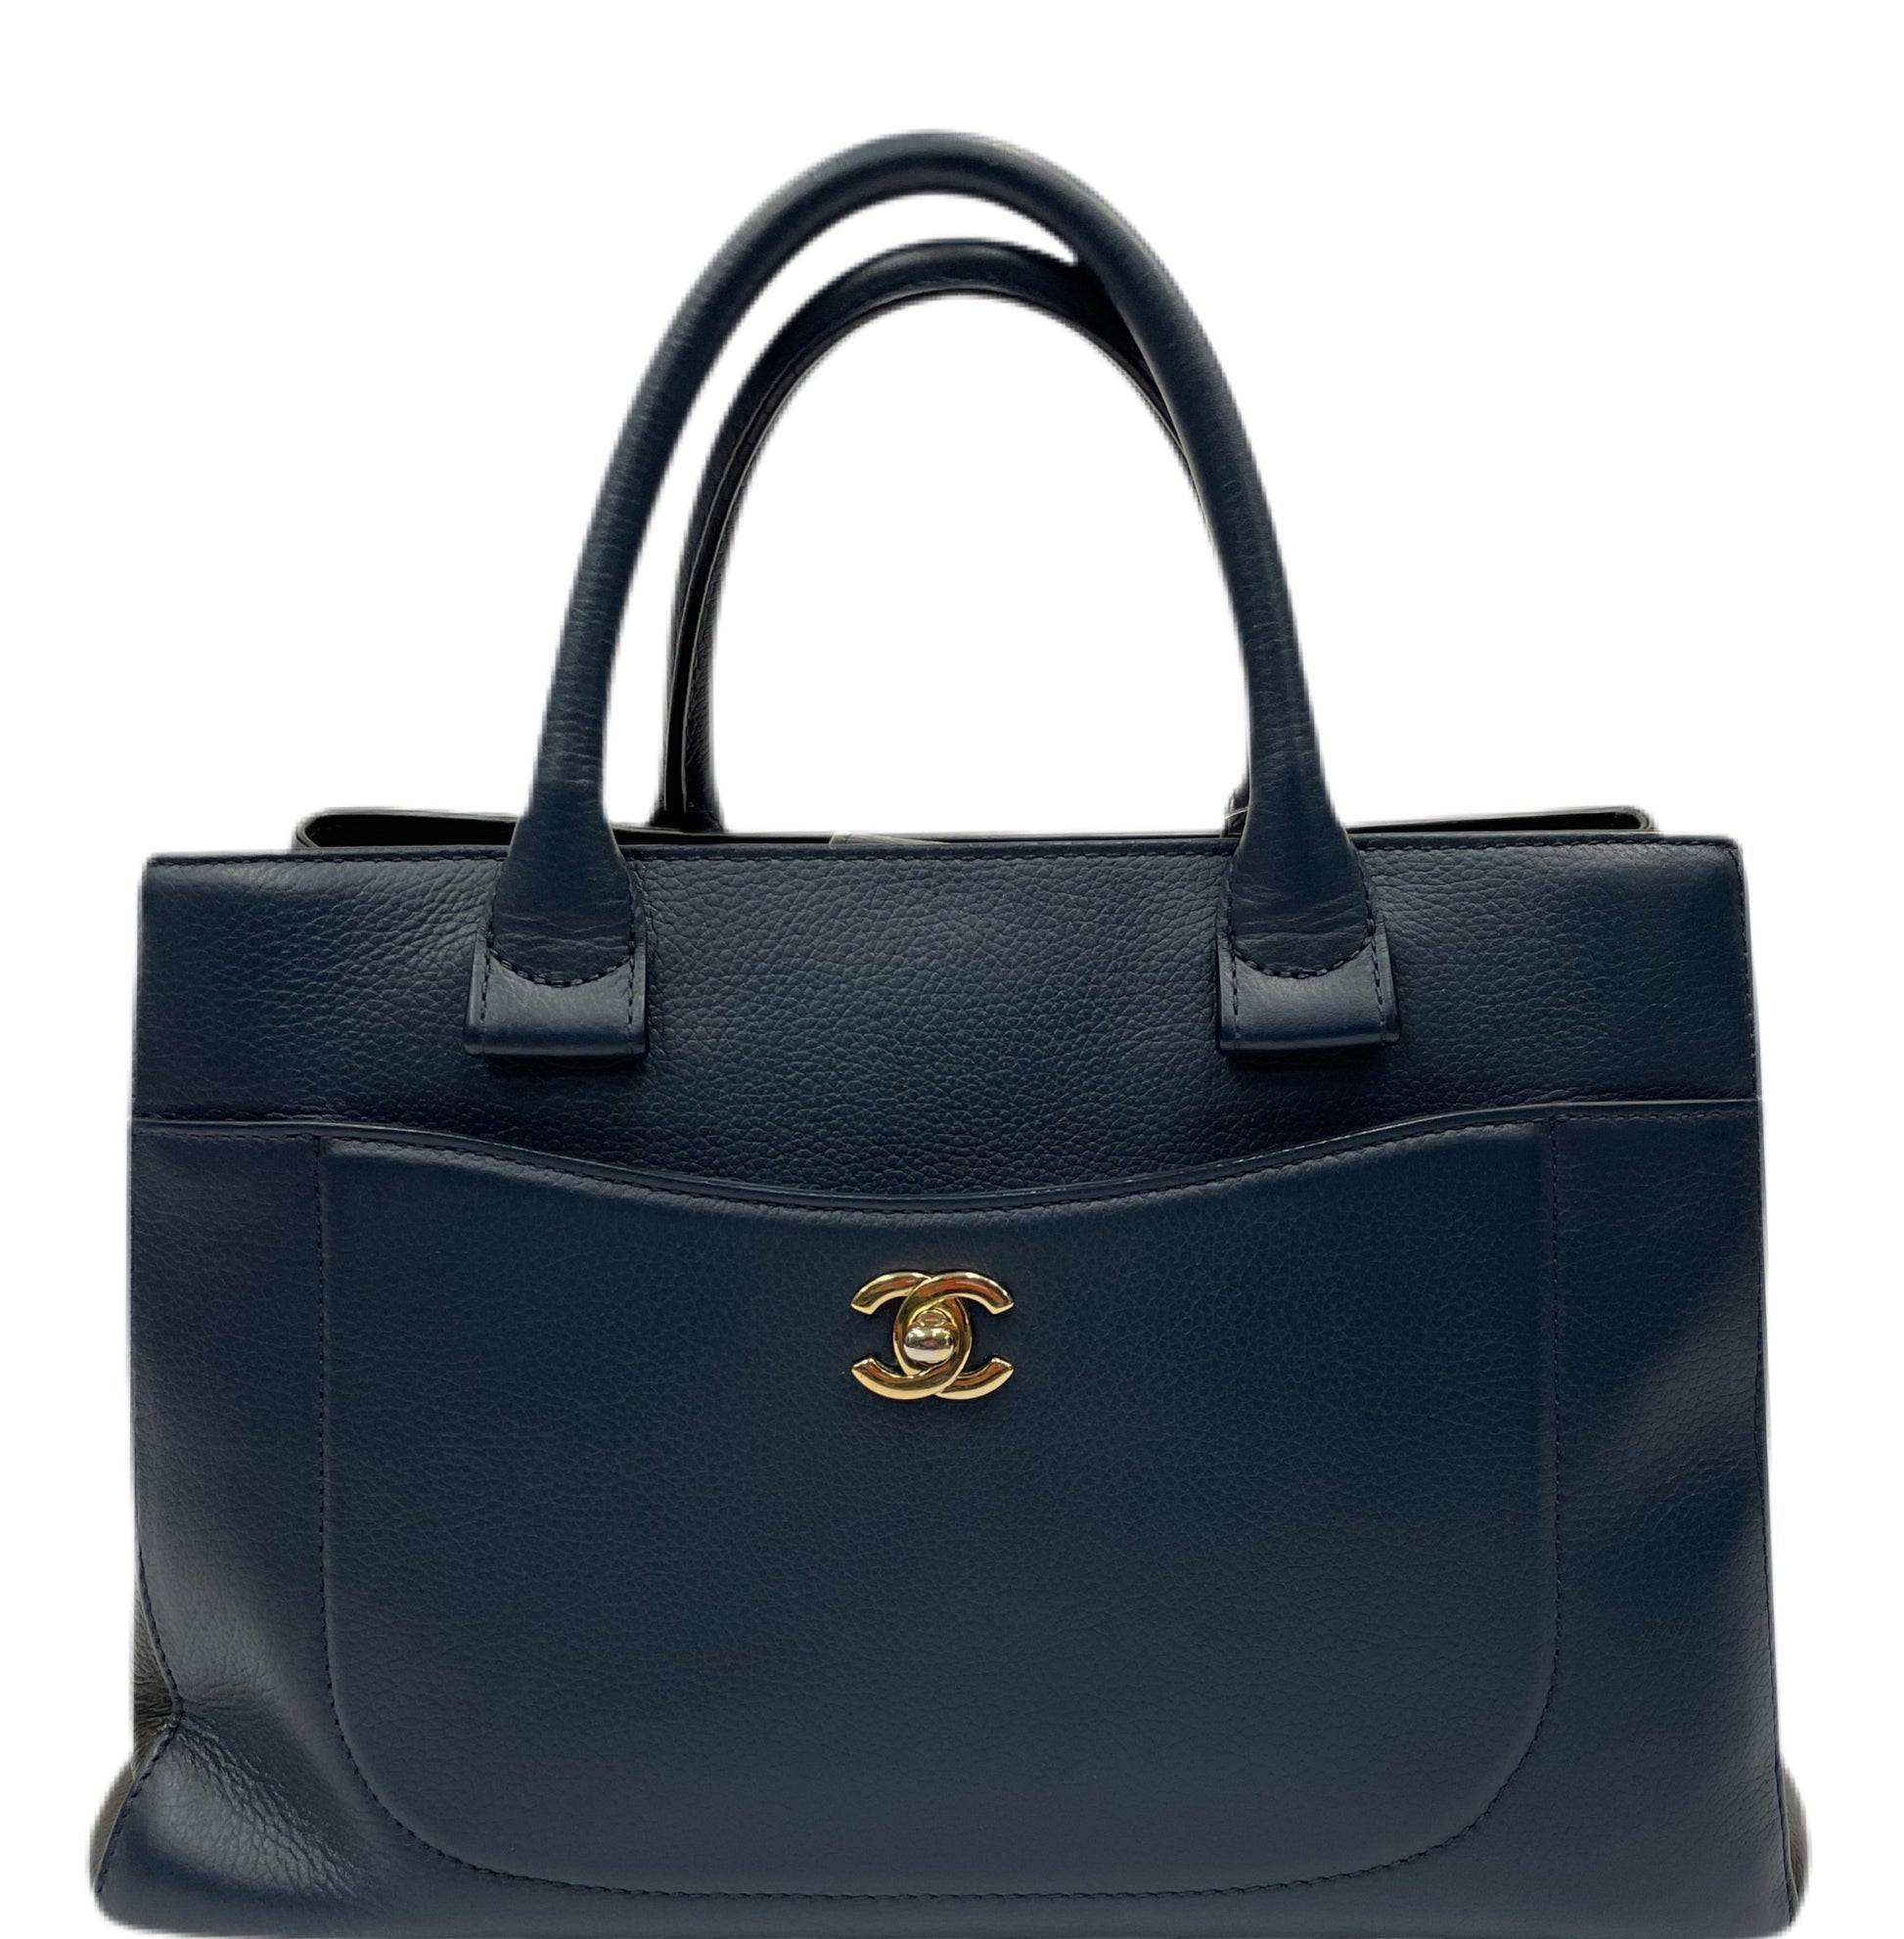 Neo Executive leather handbag